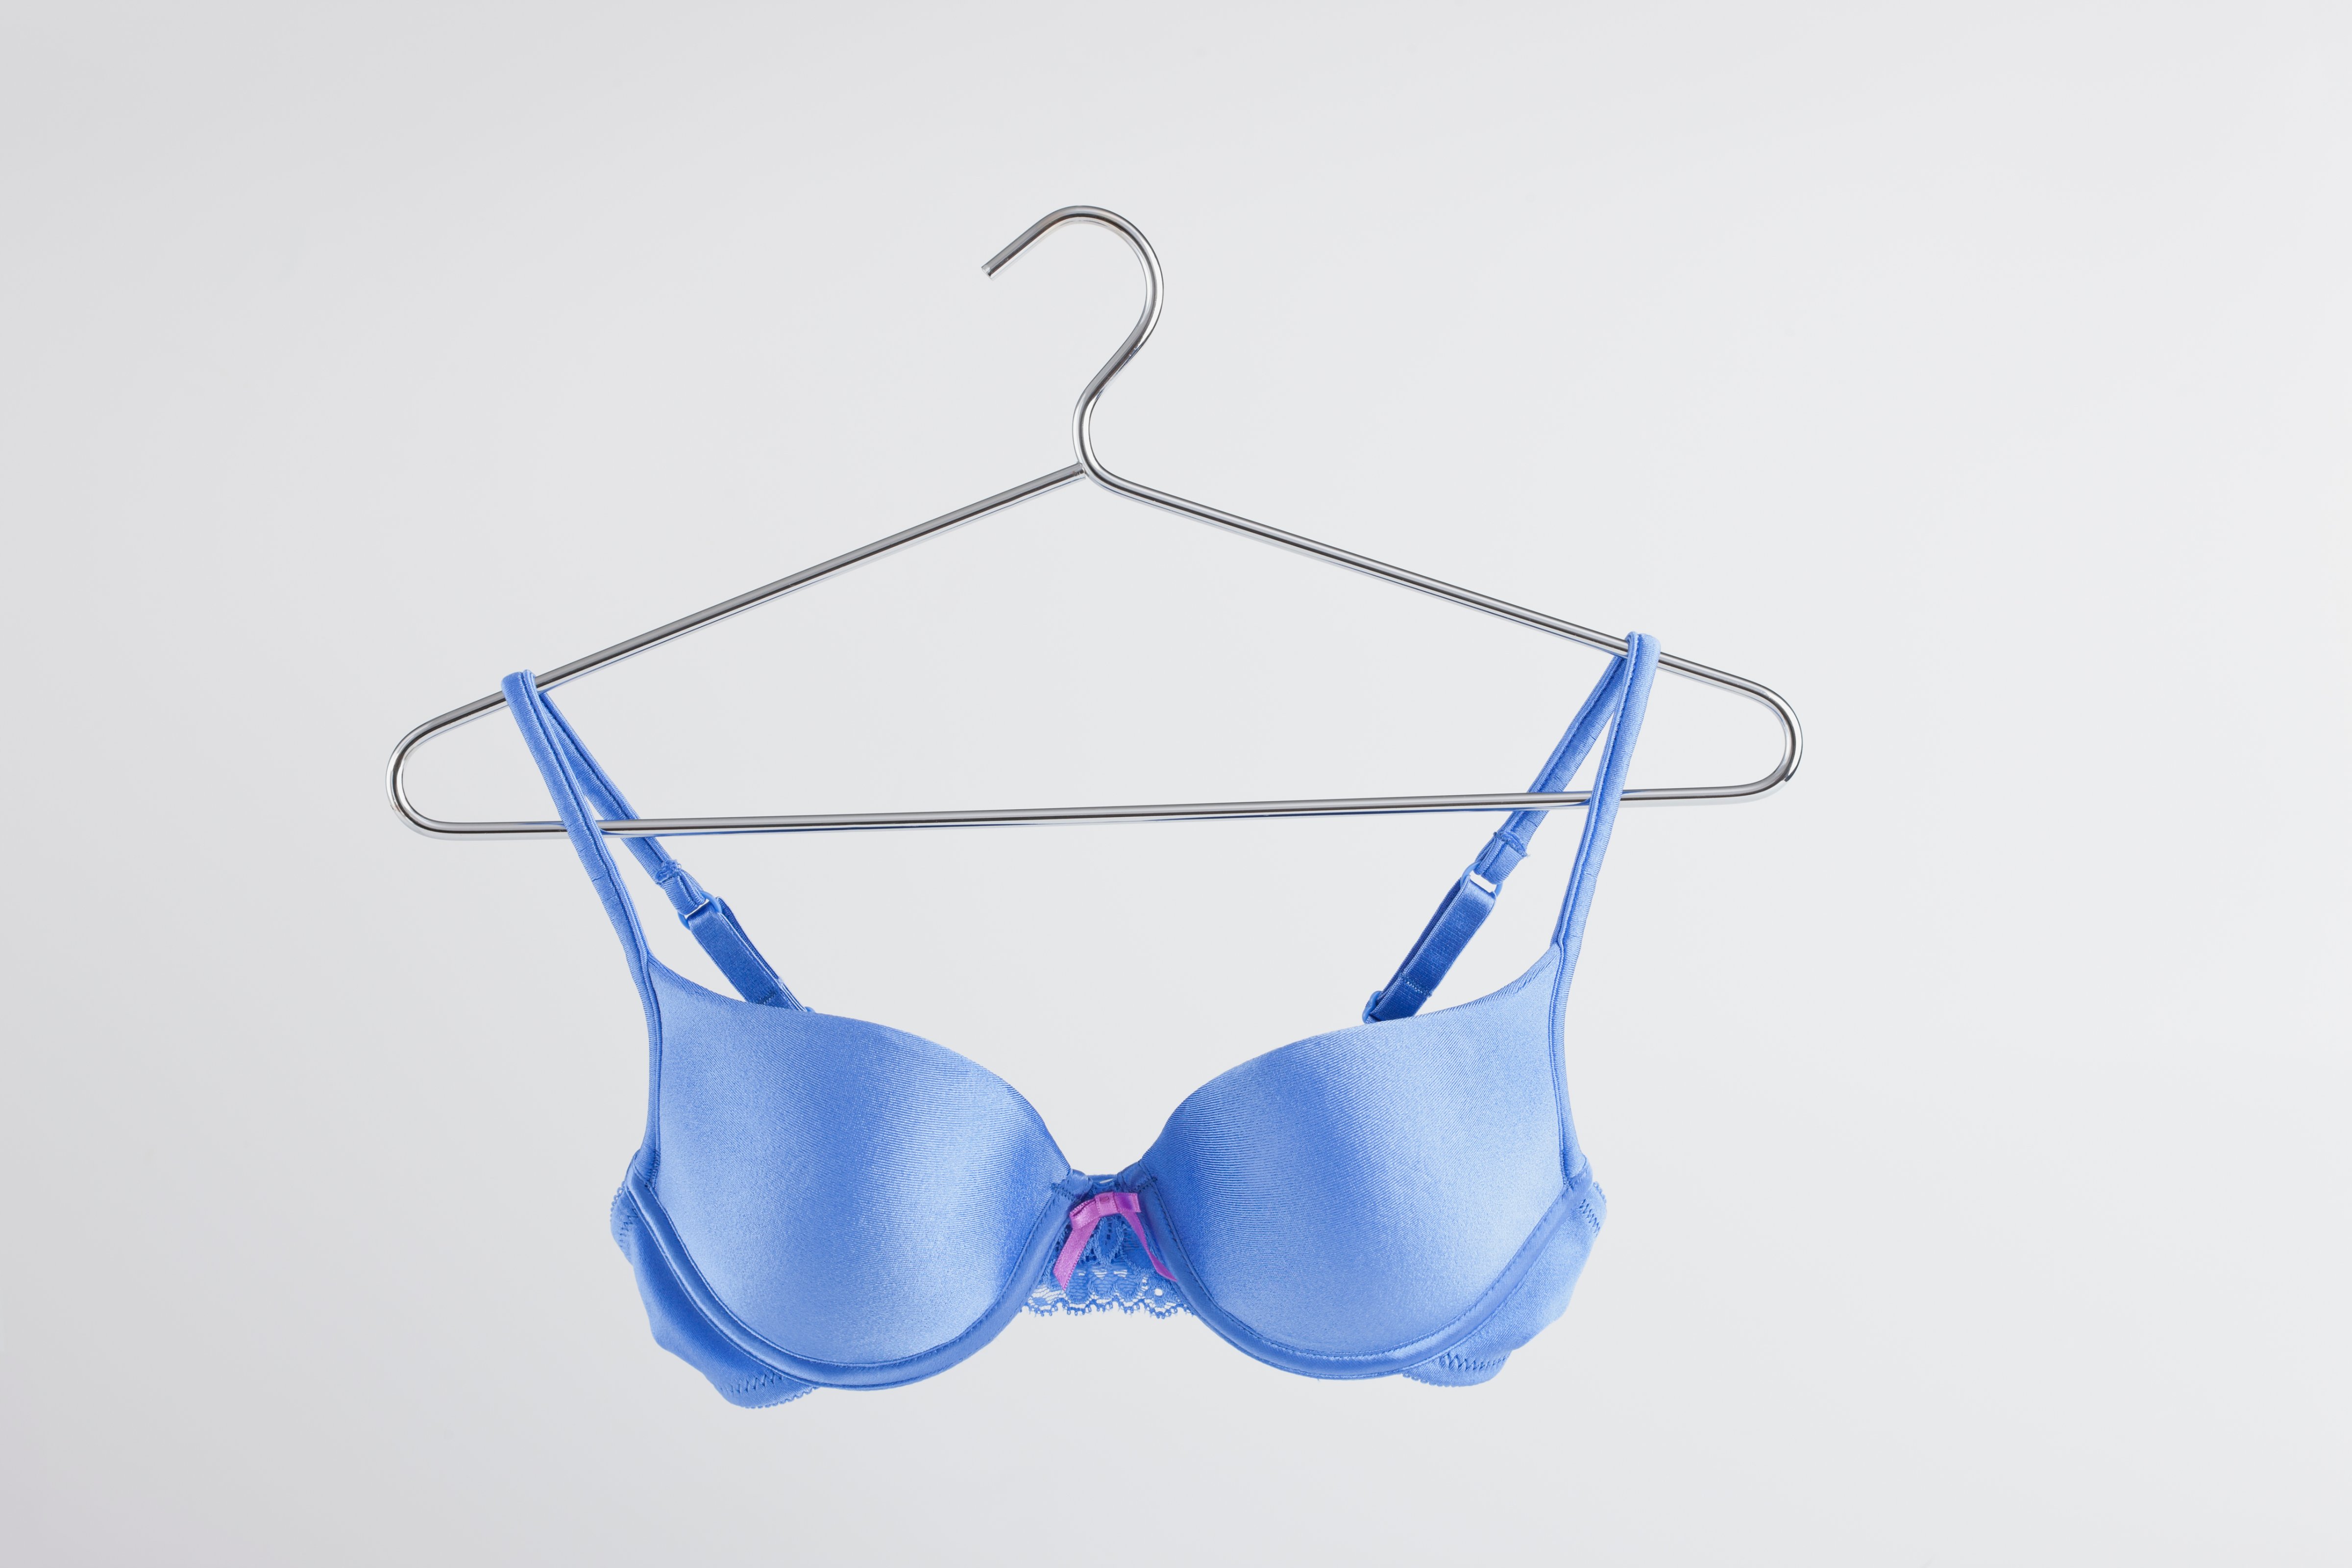 Blue bra on hanger (Getty Images)